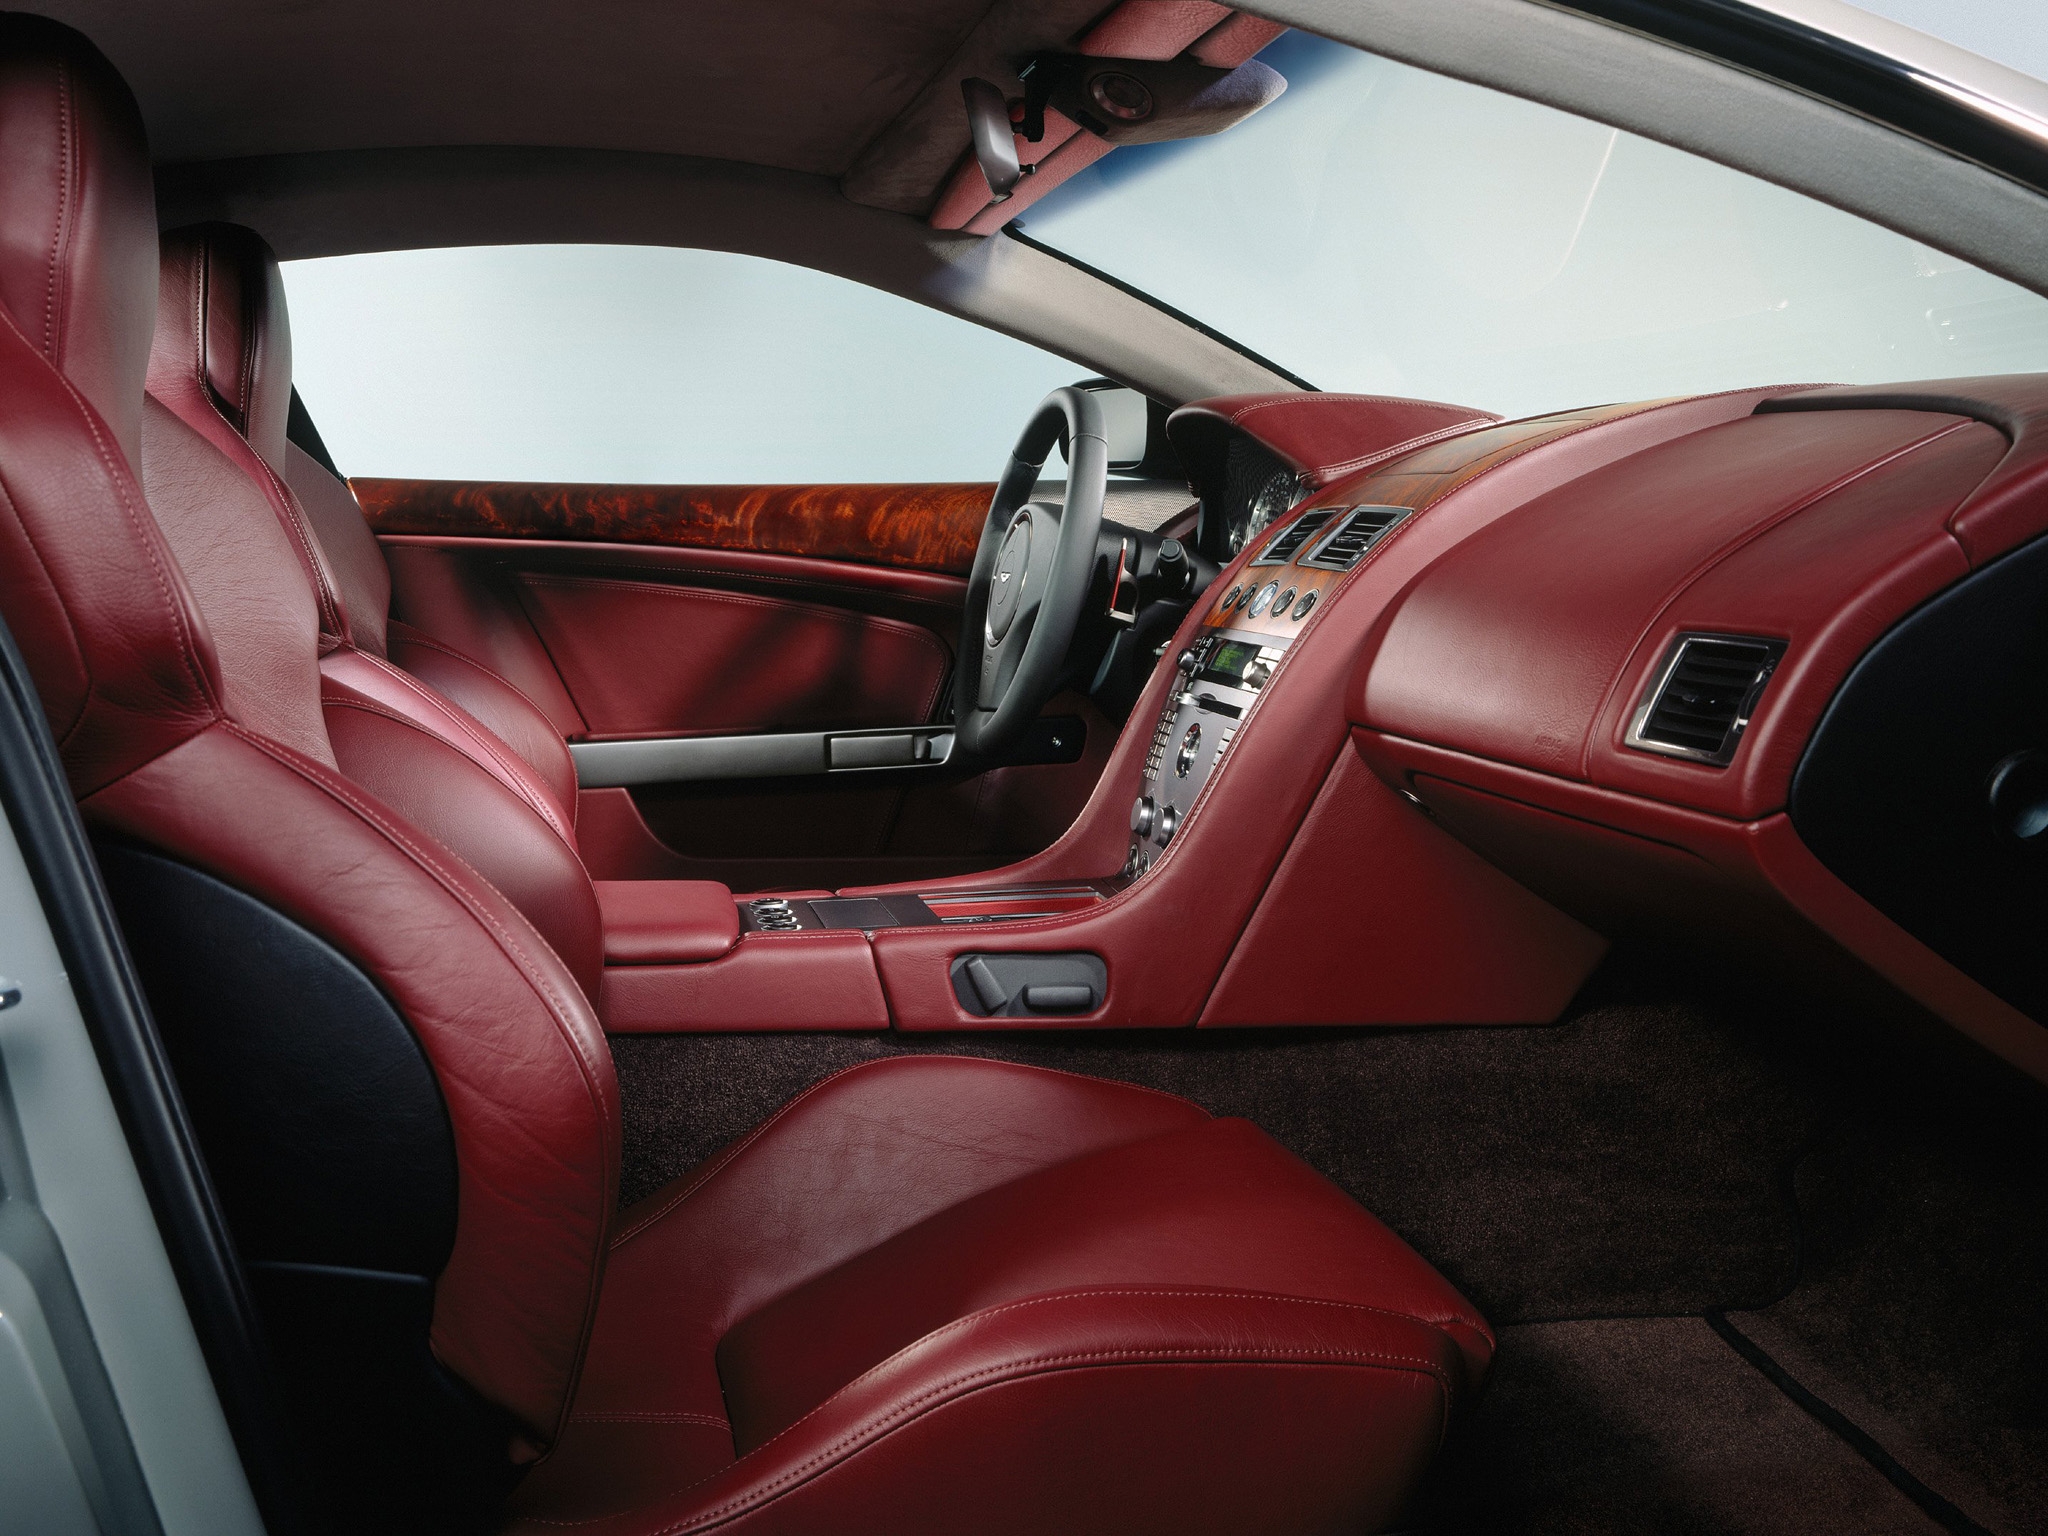 cars, interior, aston martin, red, steering wheel, rudder, salon, 2004, db9 cellphone